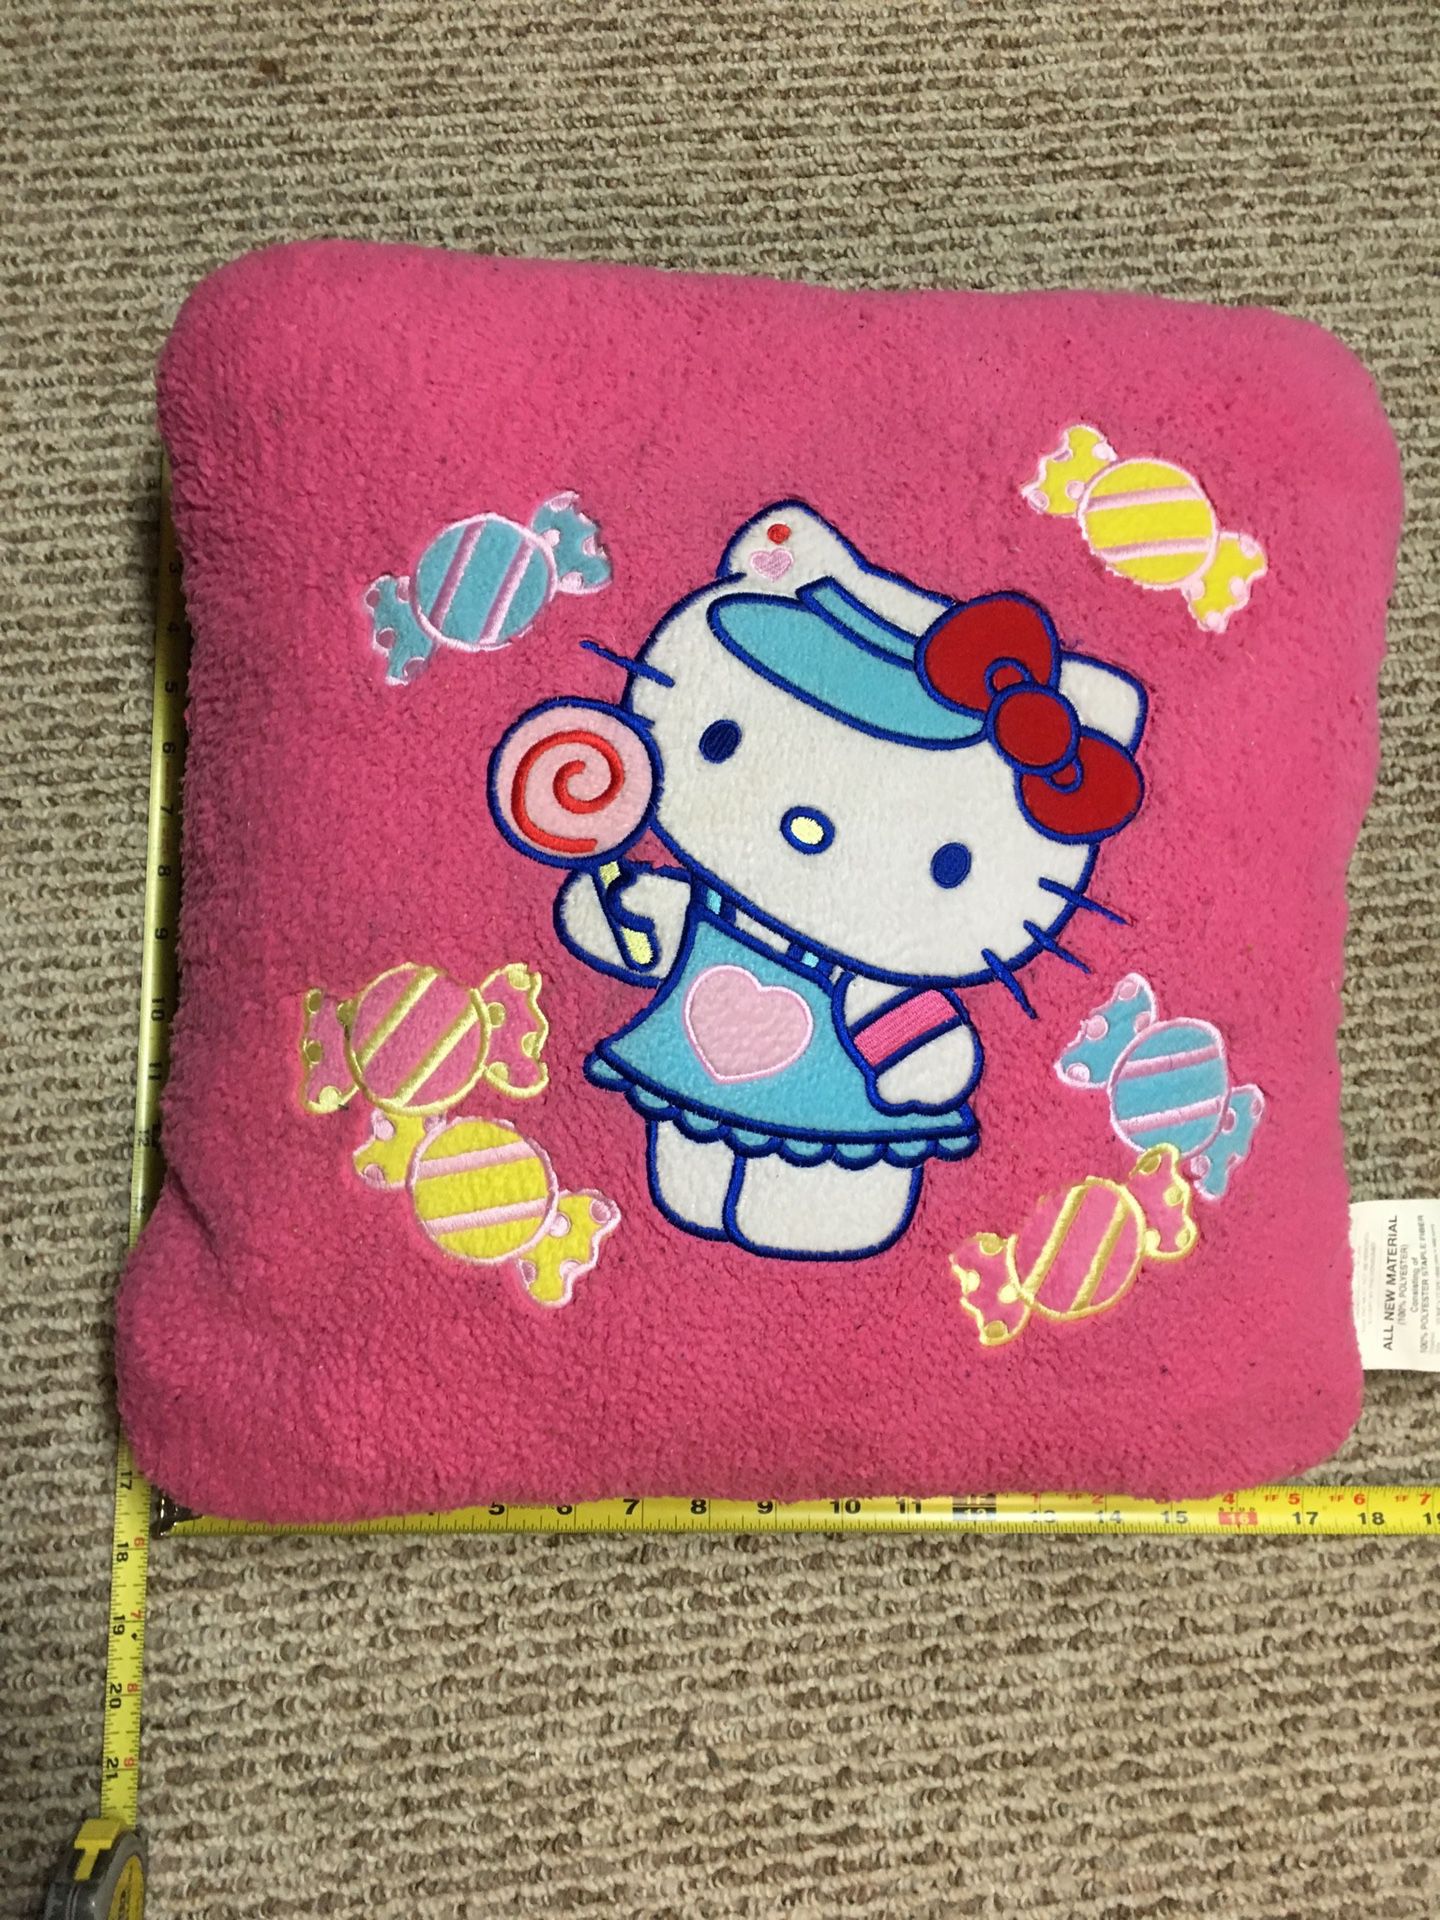 Hello Kitty pajamas, hat, pillow